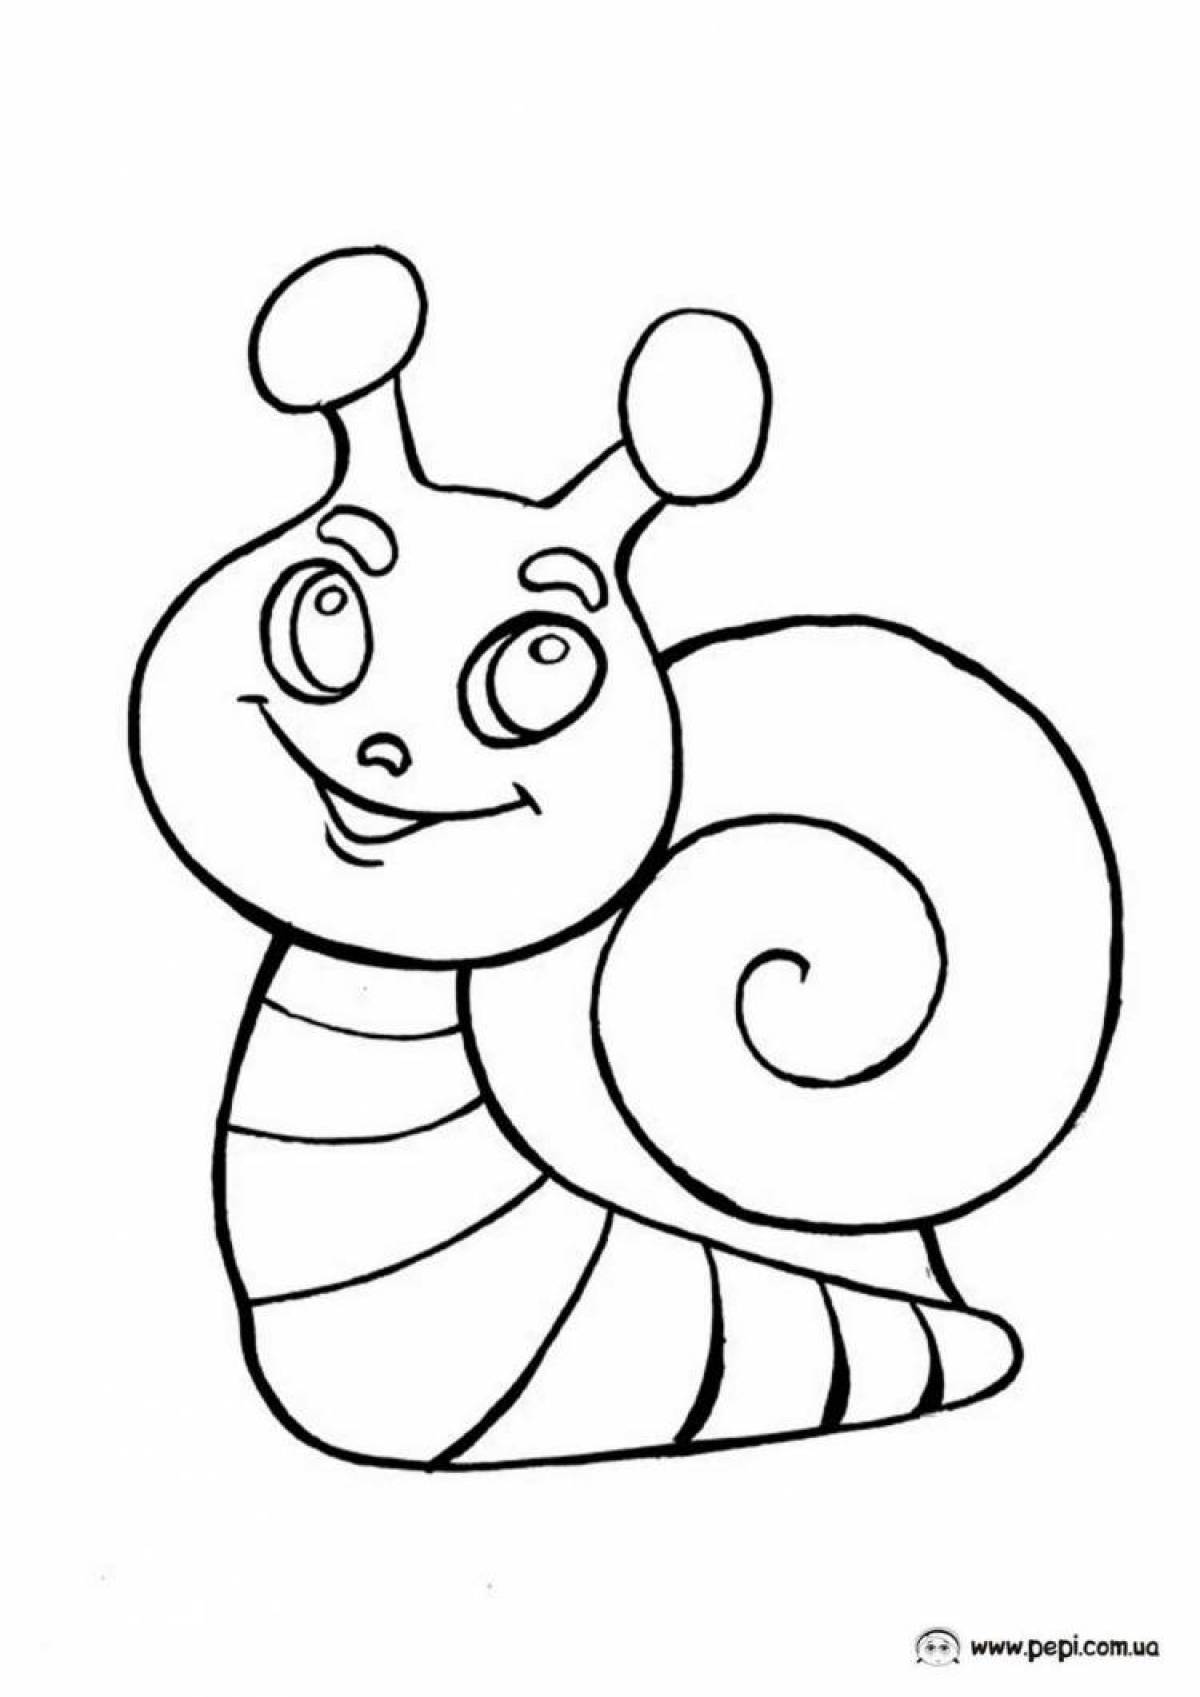 Joyful snail coloring for kids